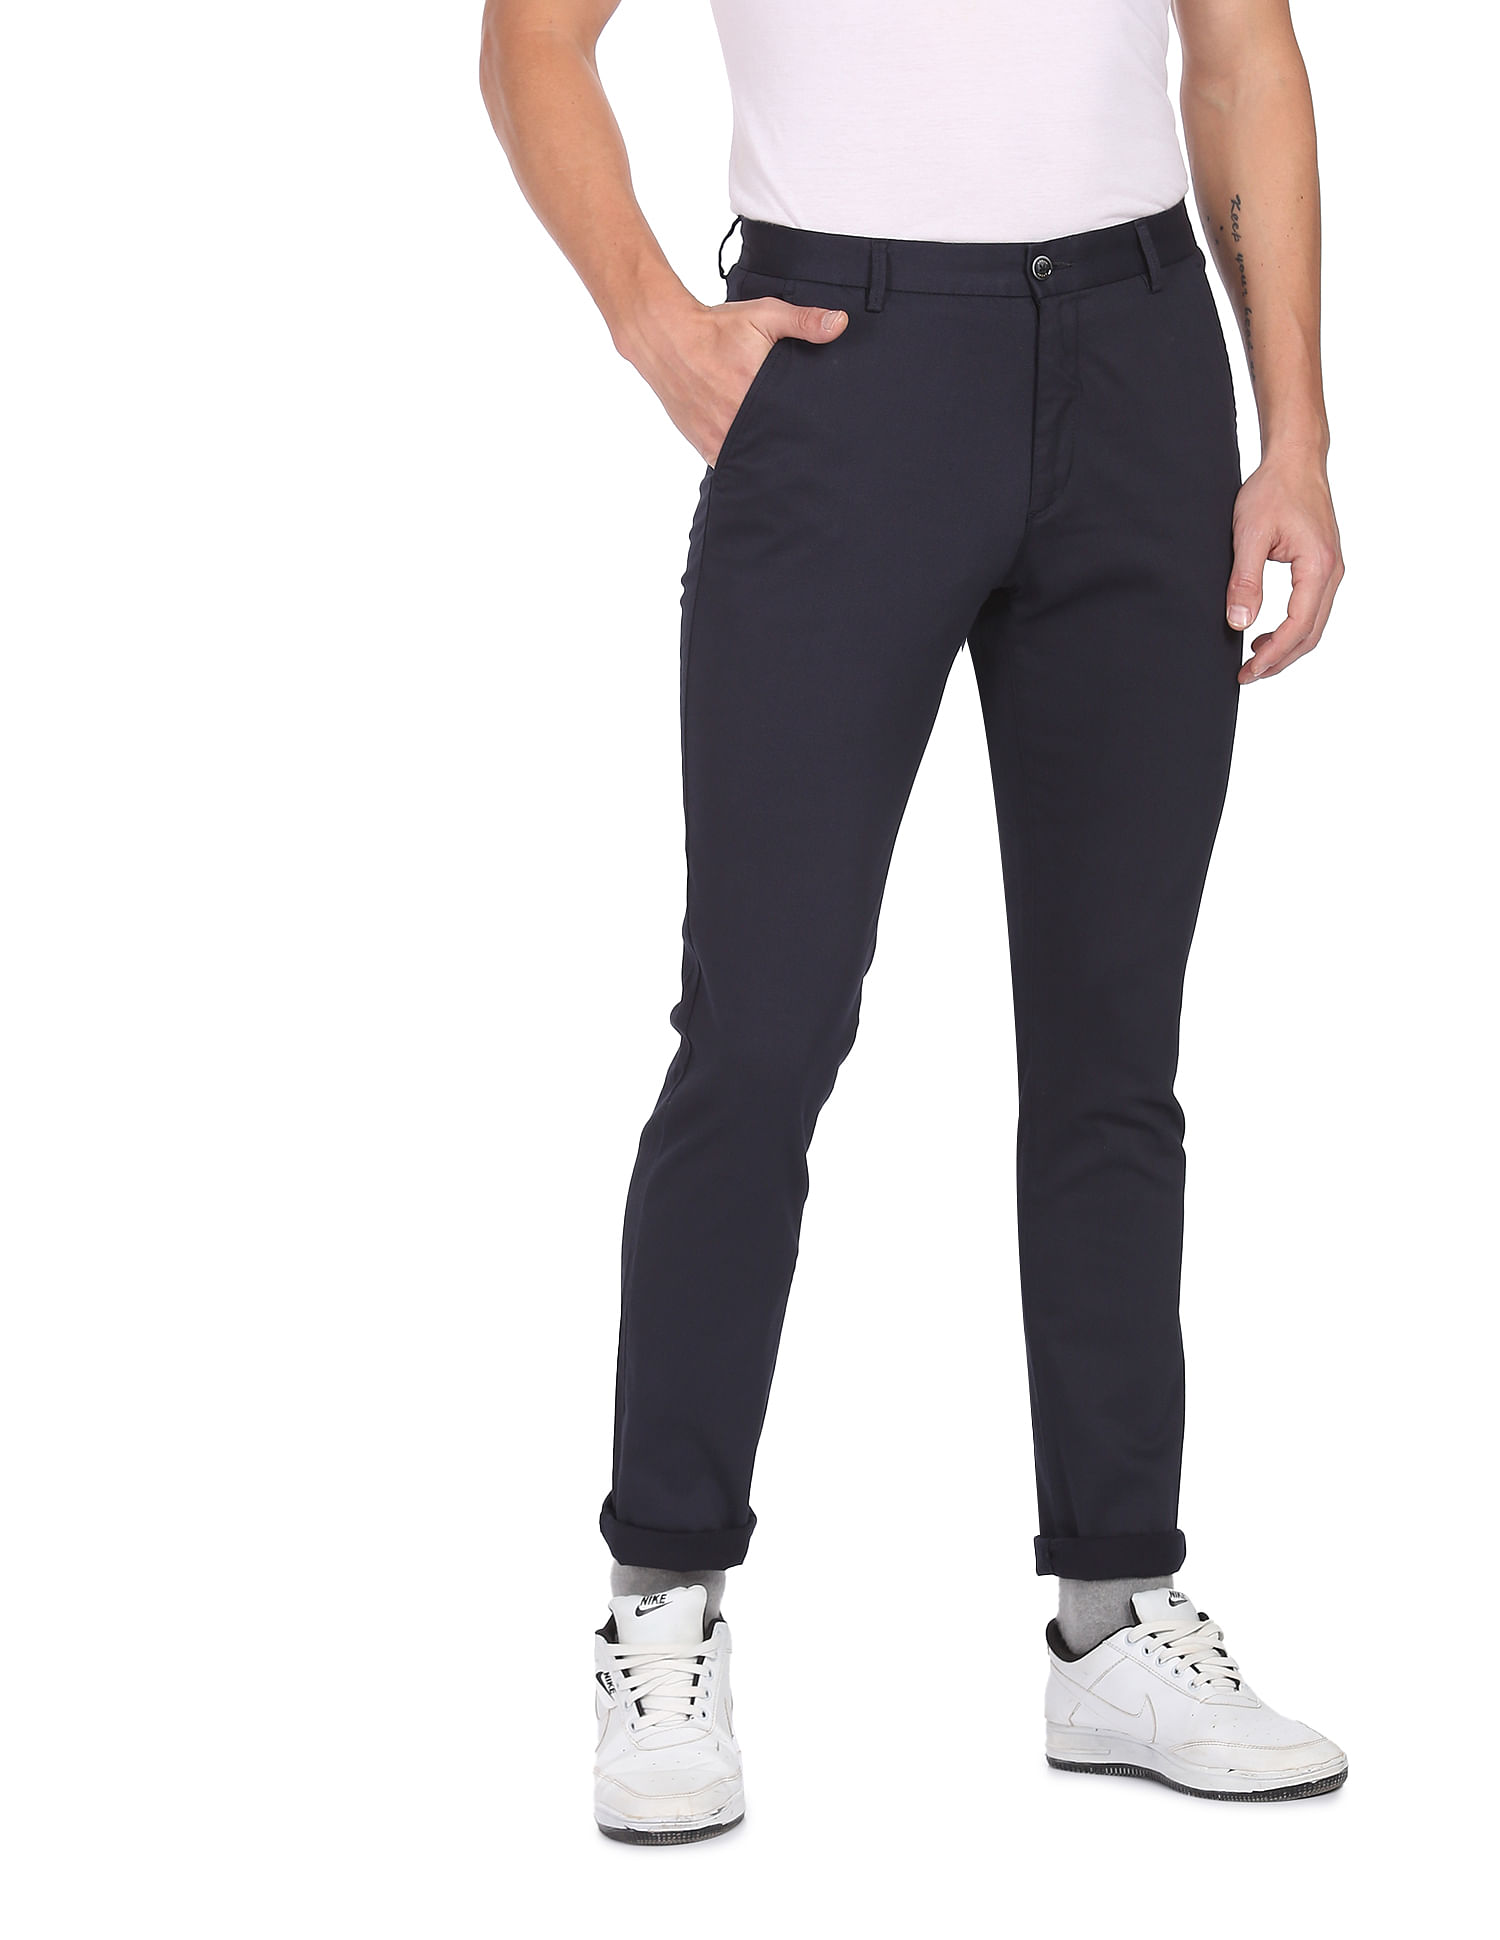 Printed Fake Denim Pants Women Elegant Pocket Design Slim Skinny  Foxy  Brands